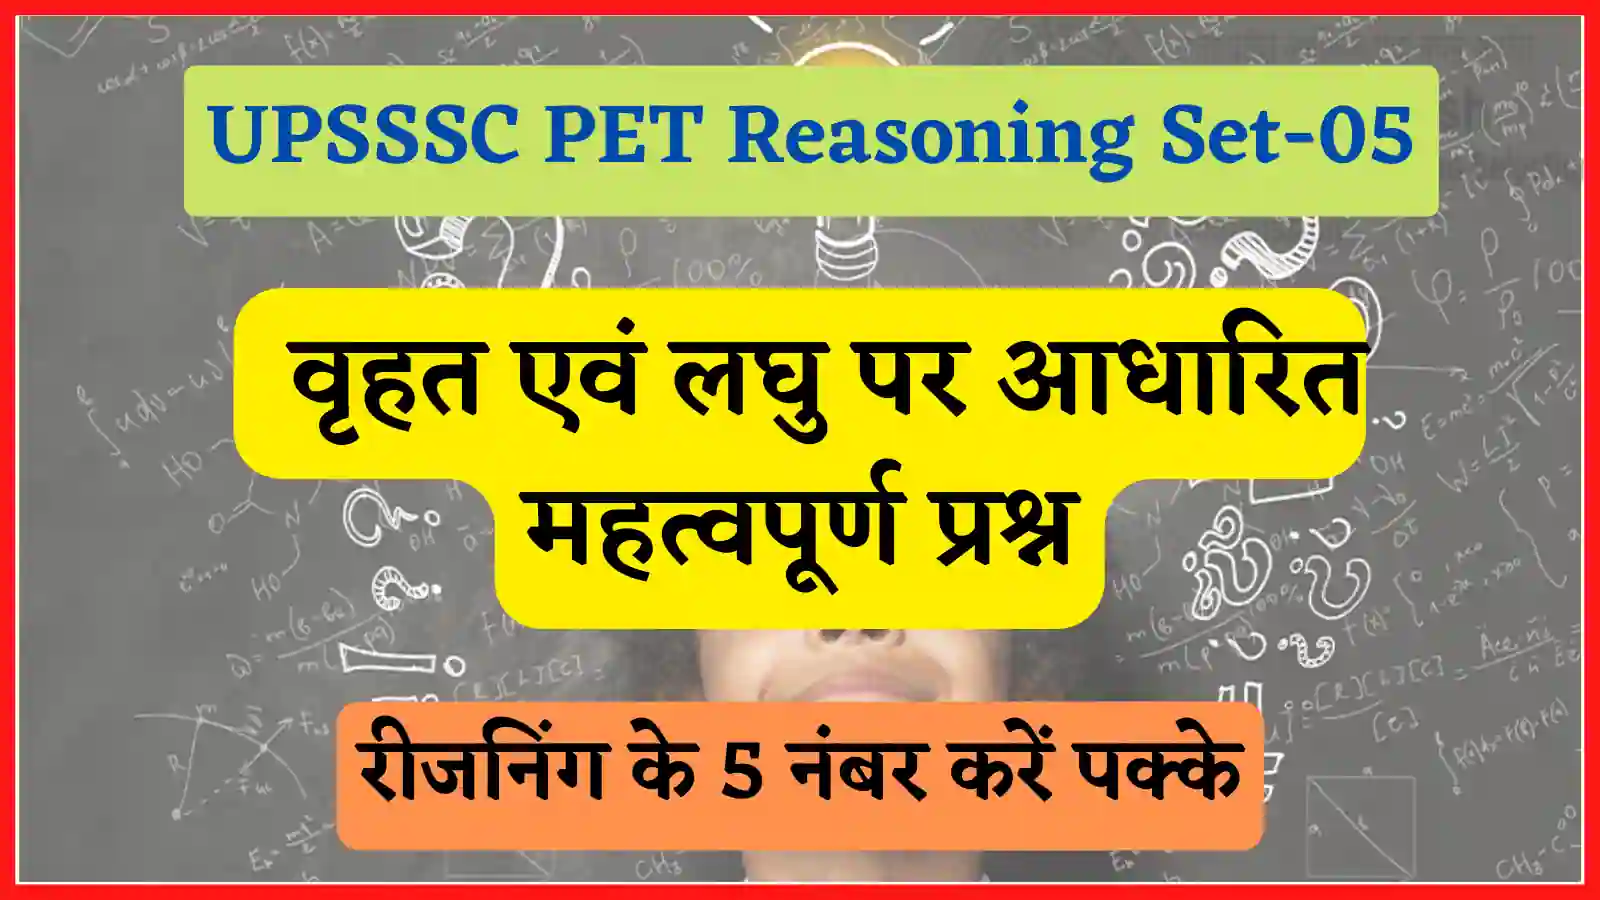 UPSSSC PET Reasoning Practice Set-05